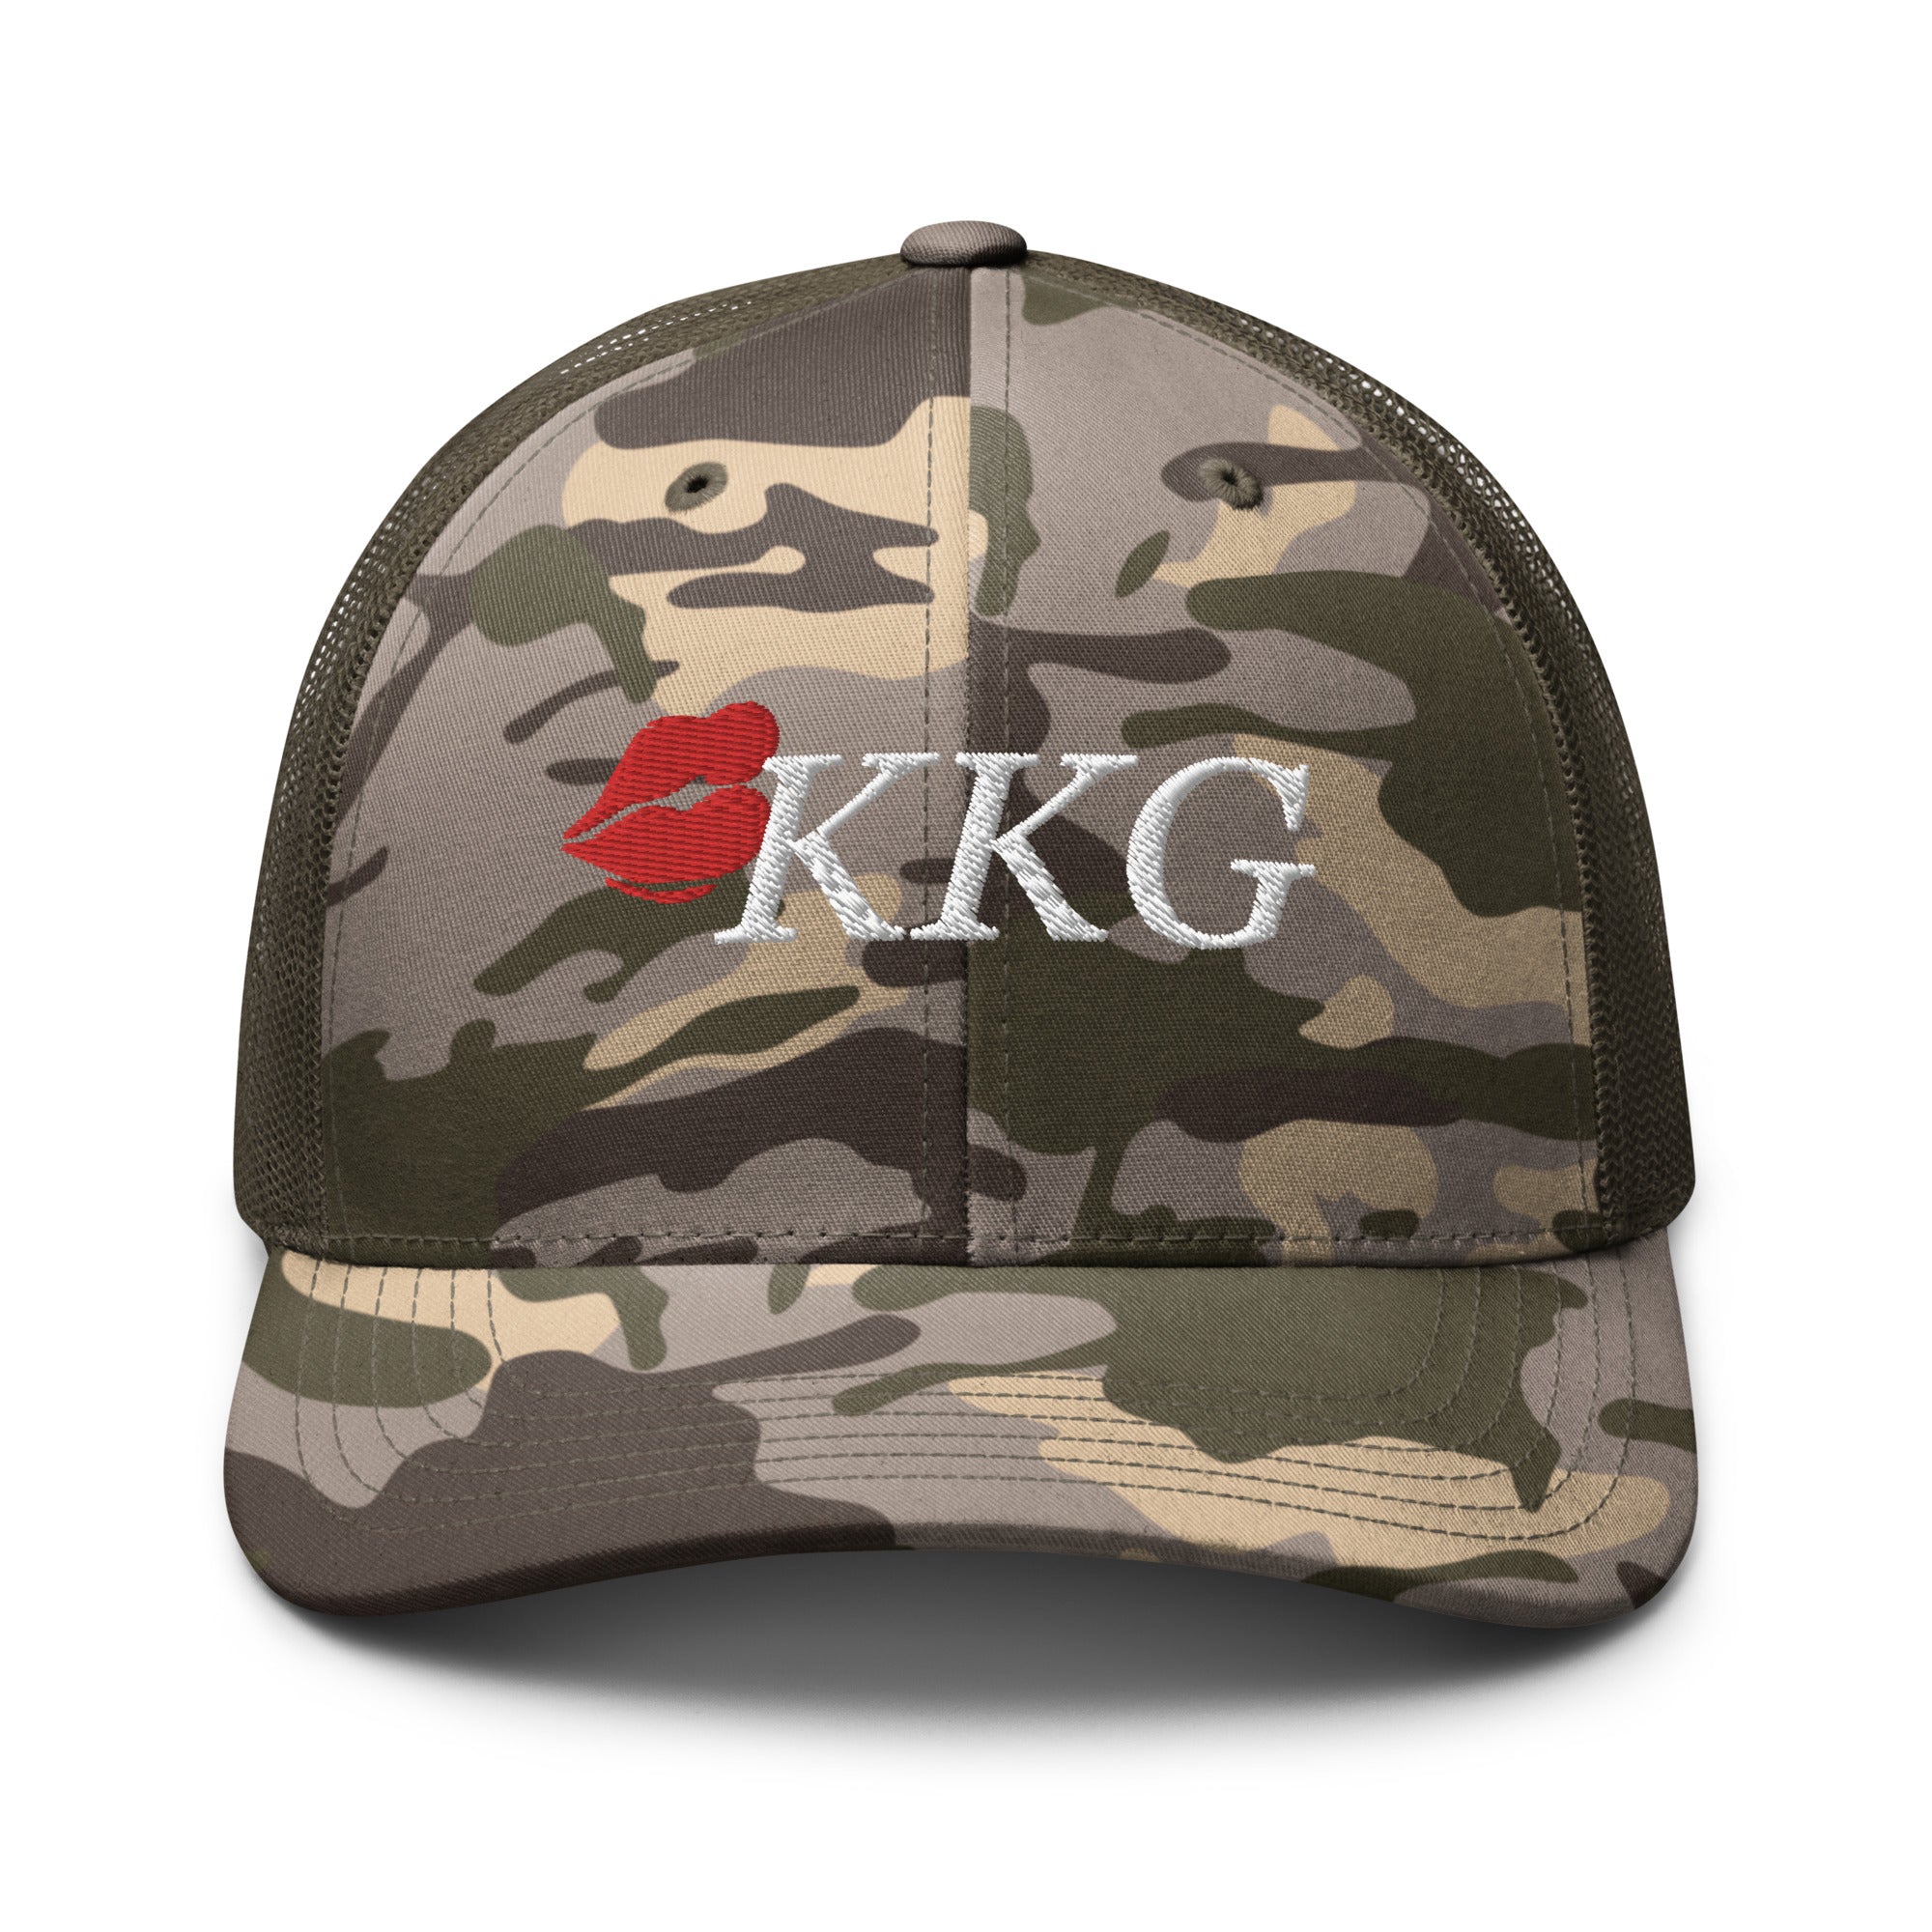 Kappa Kappa Gamma Camouflage trucker hat